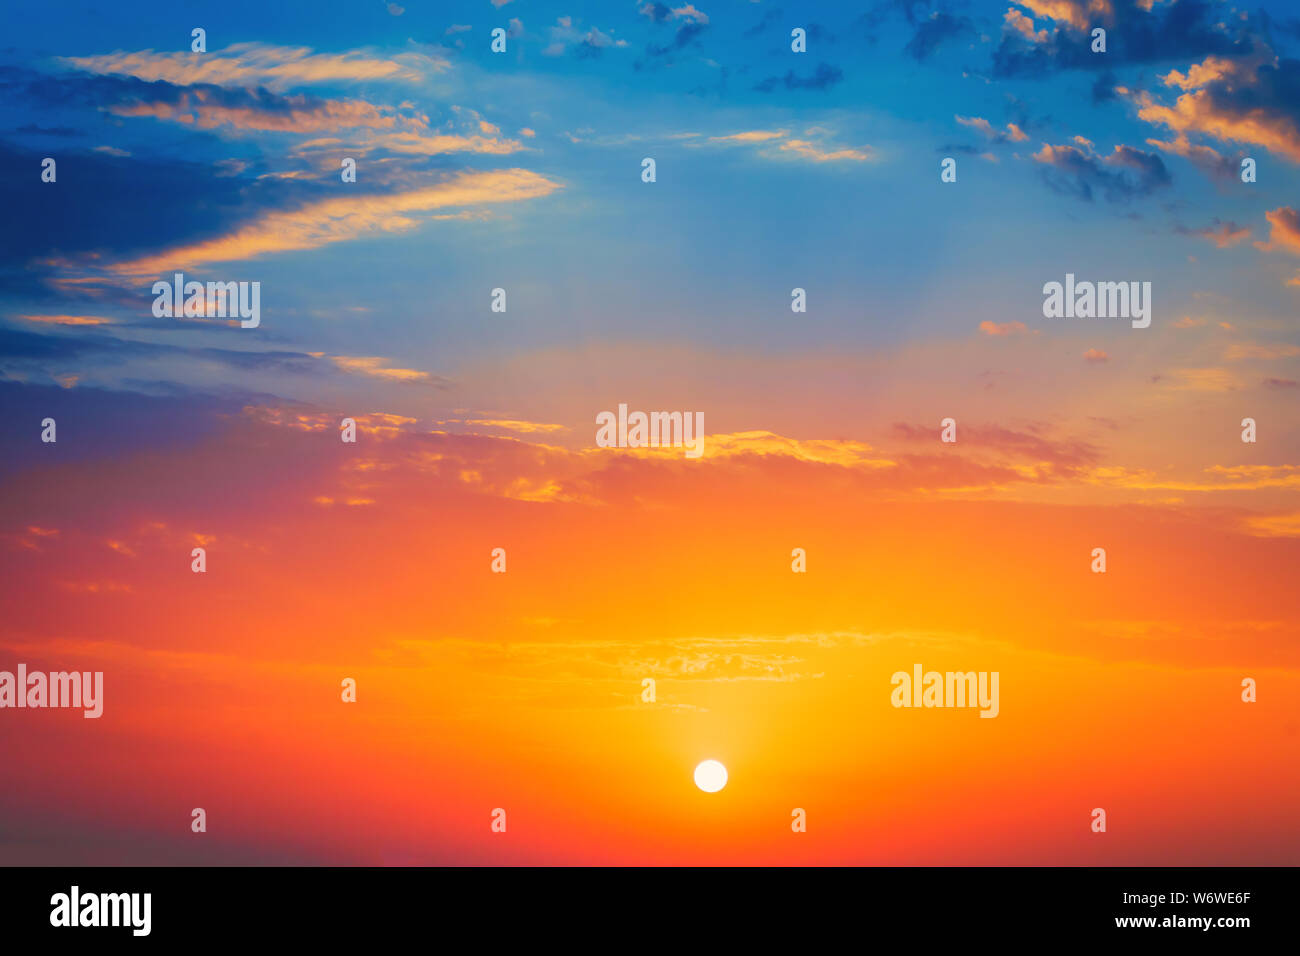 unique sunrise background for meditation. new wallpaper Stock Photo